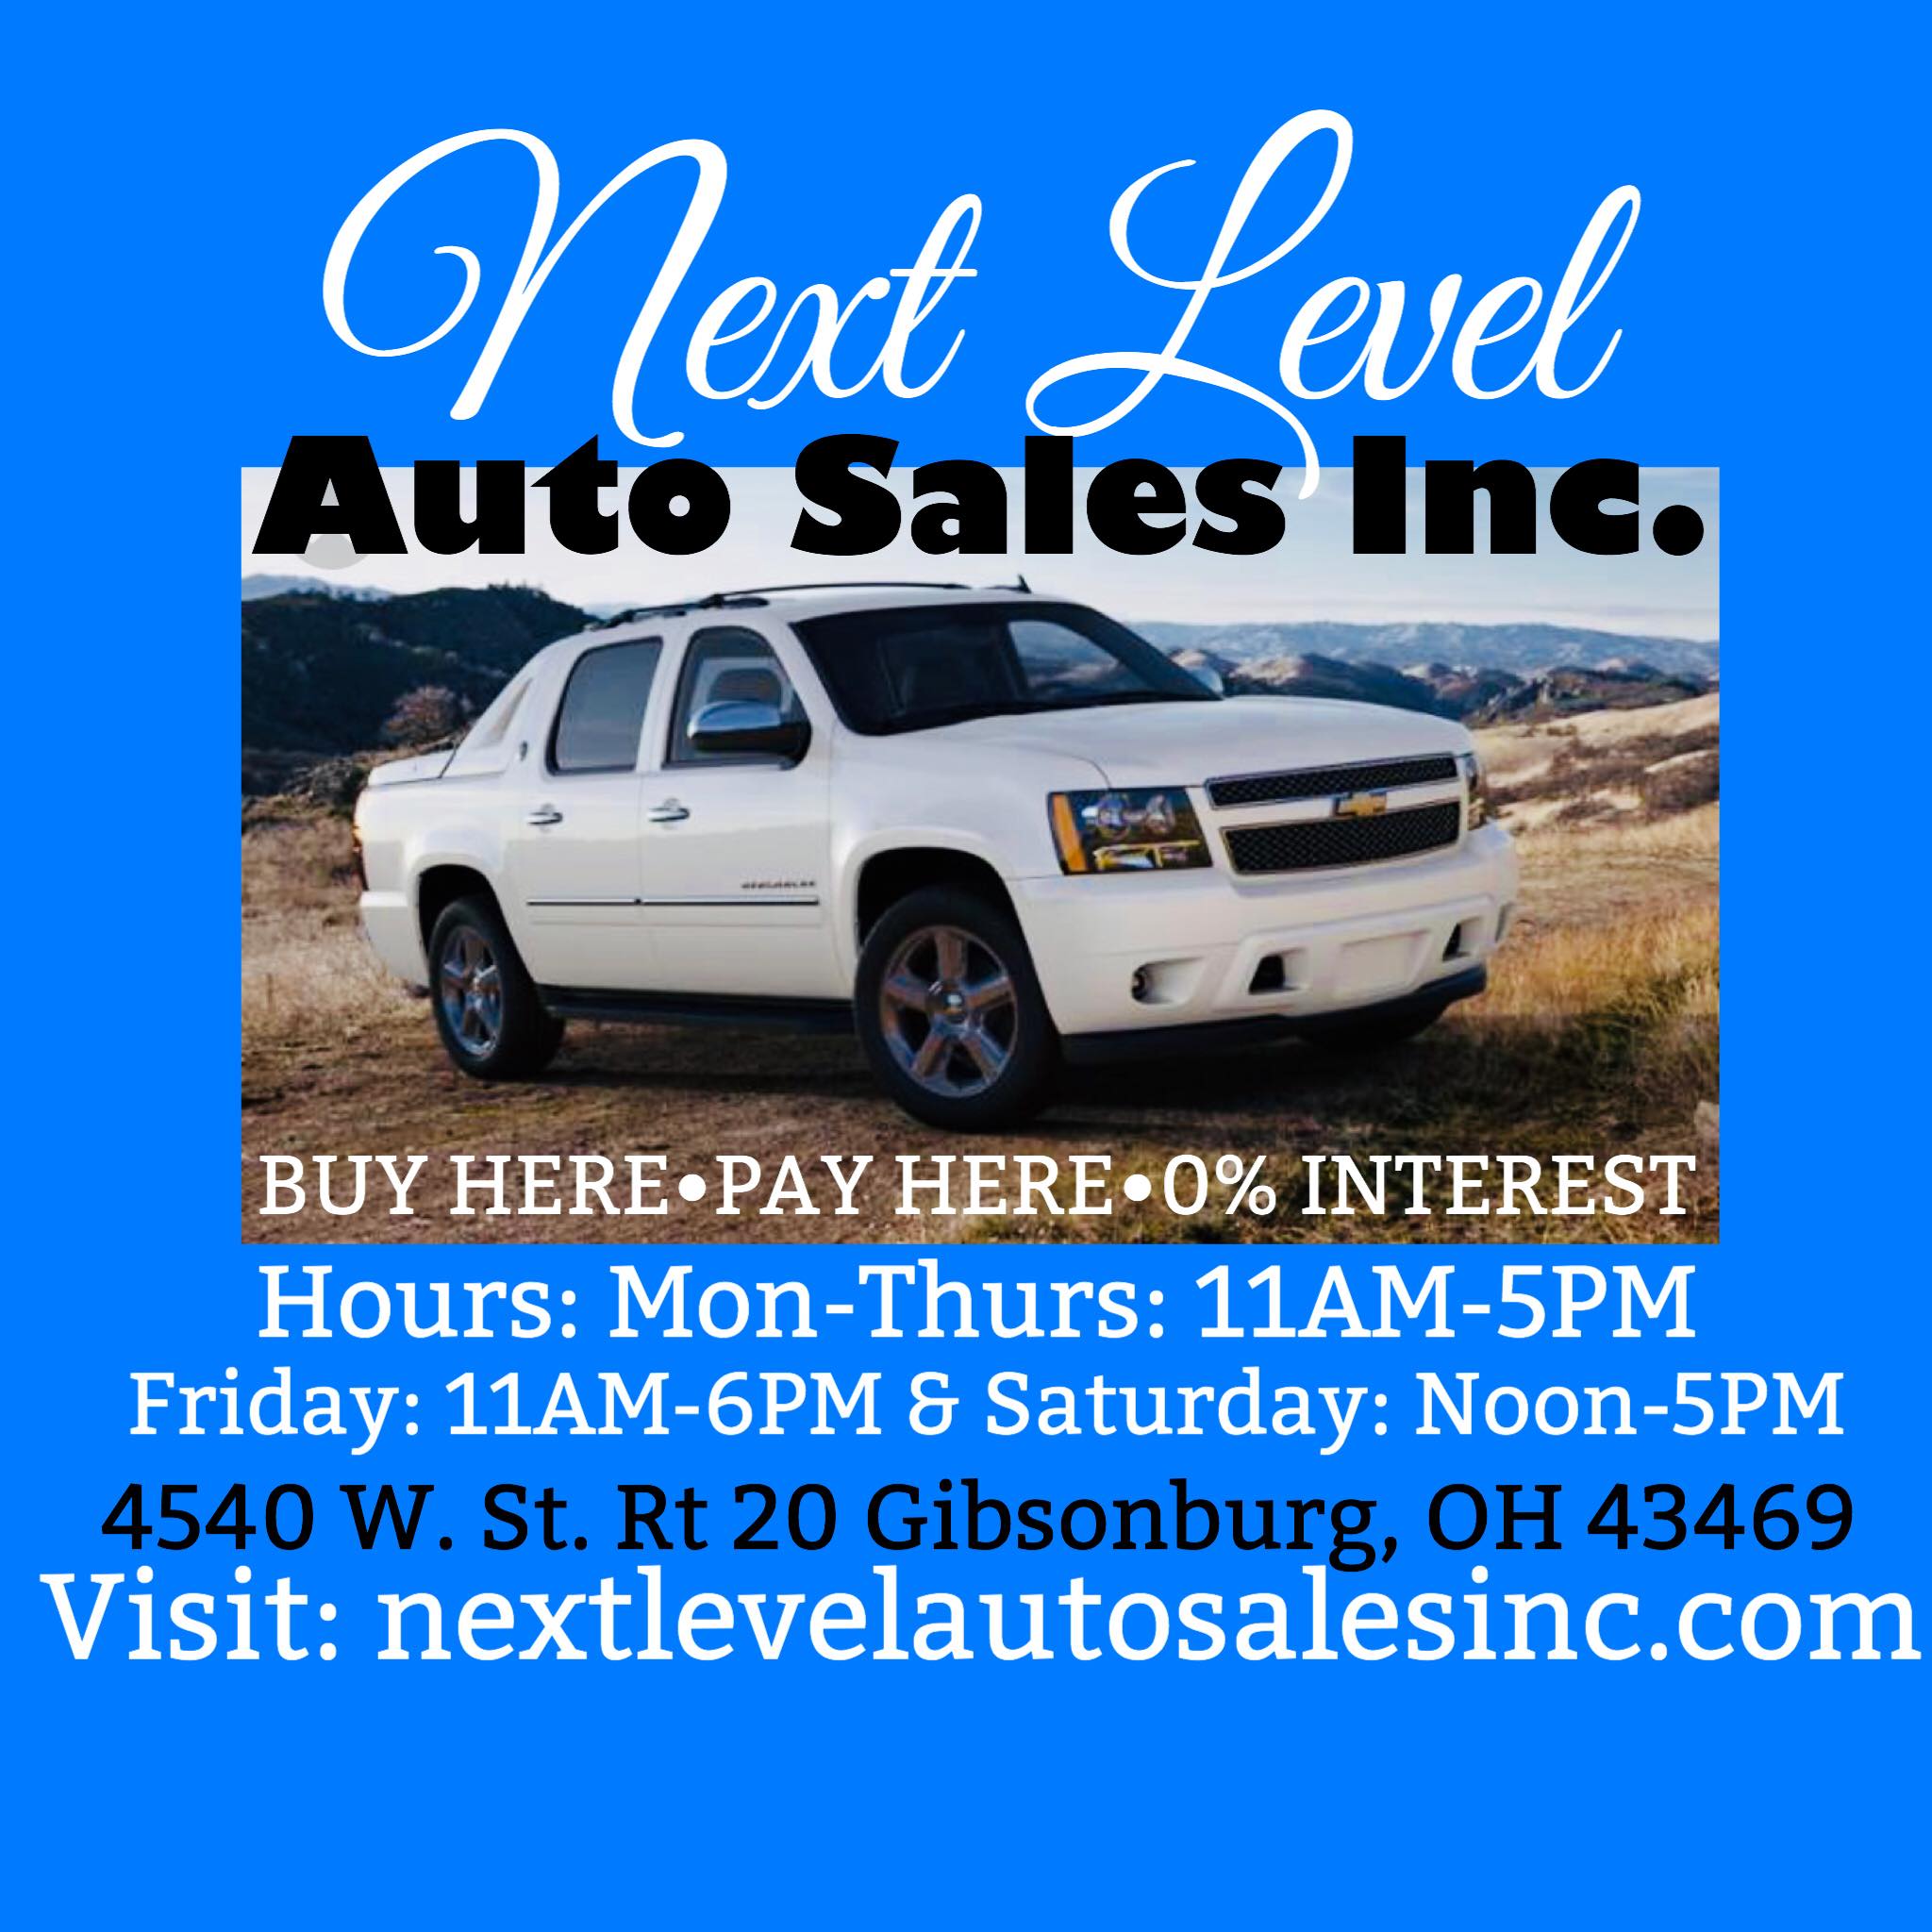 Next Level Auto Sales Inc